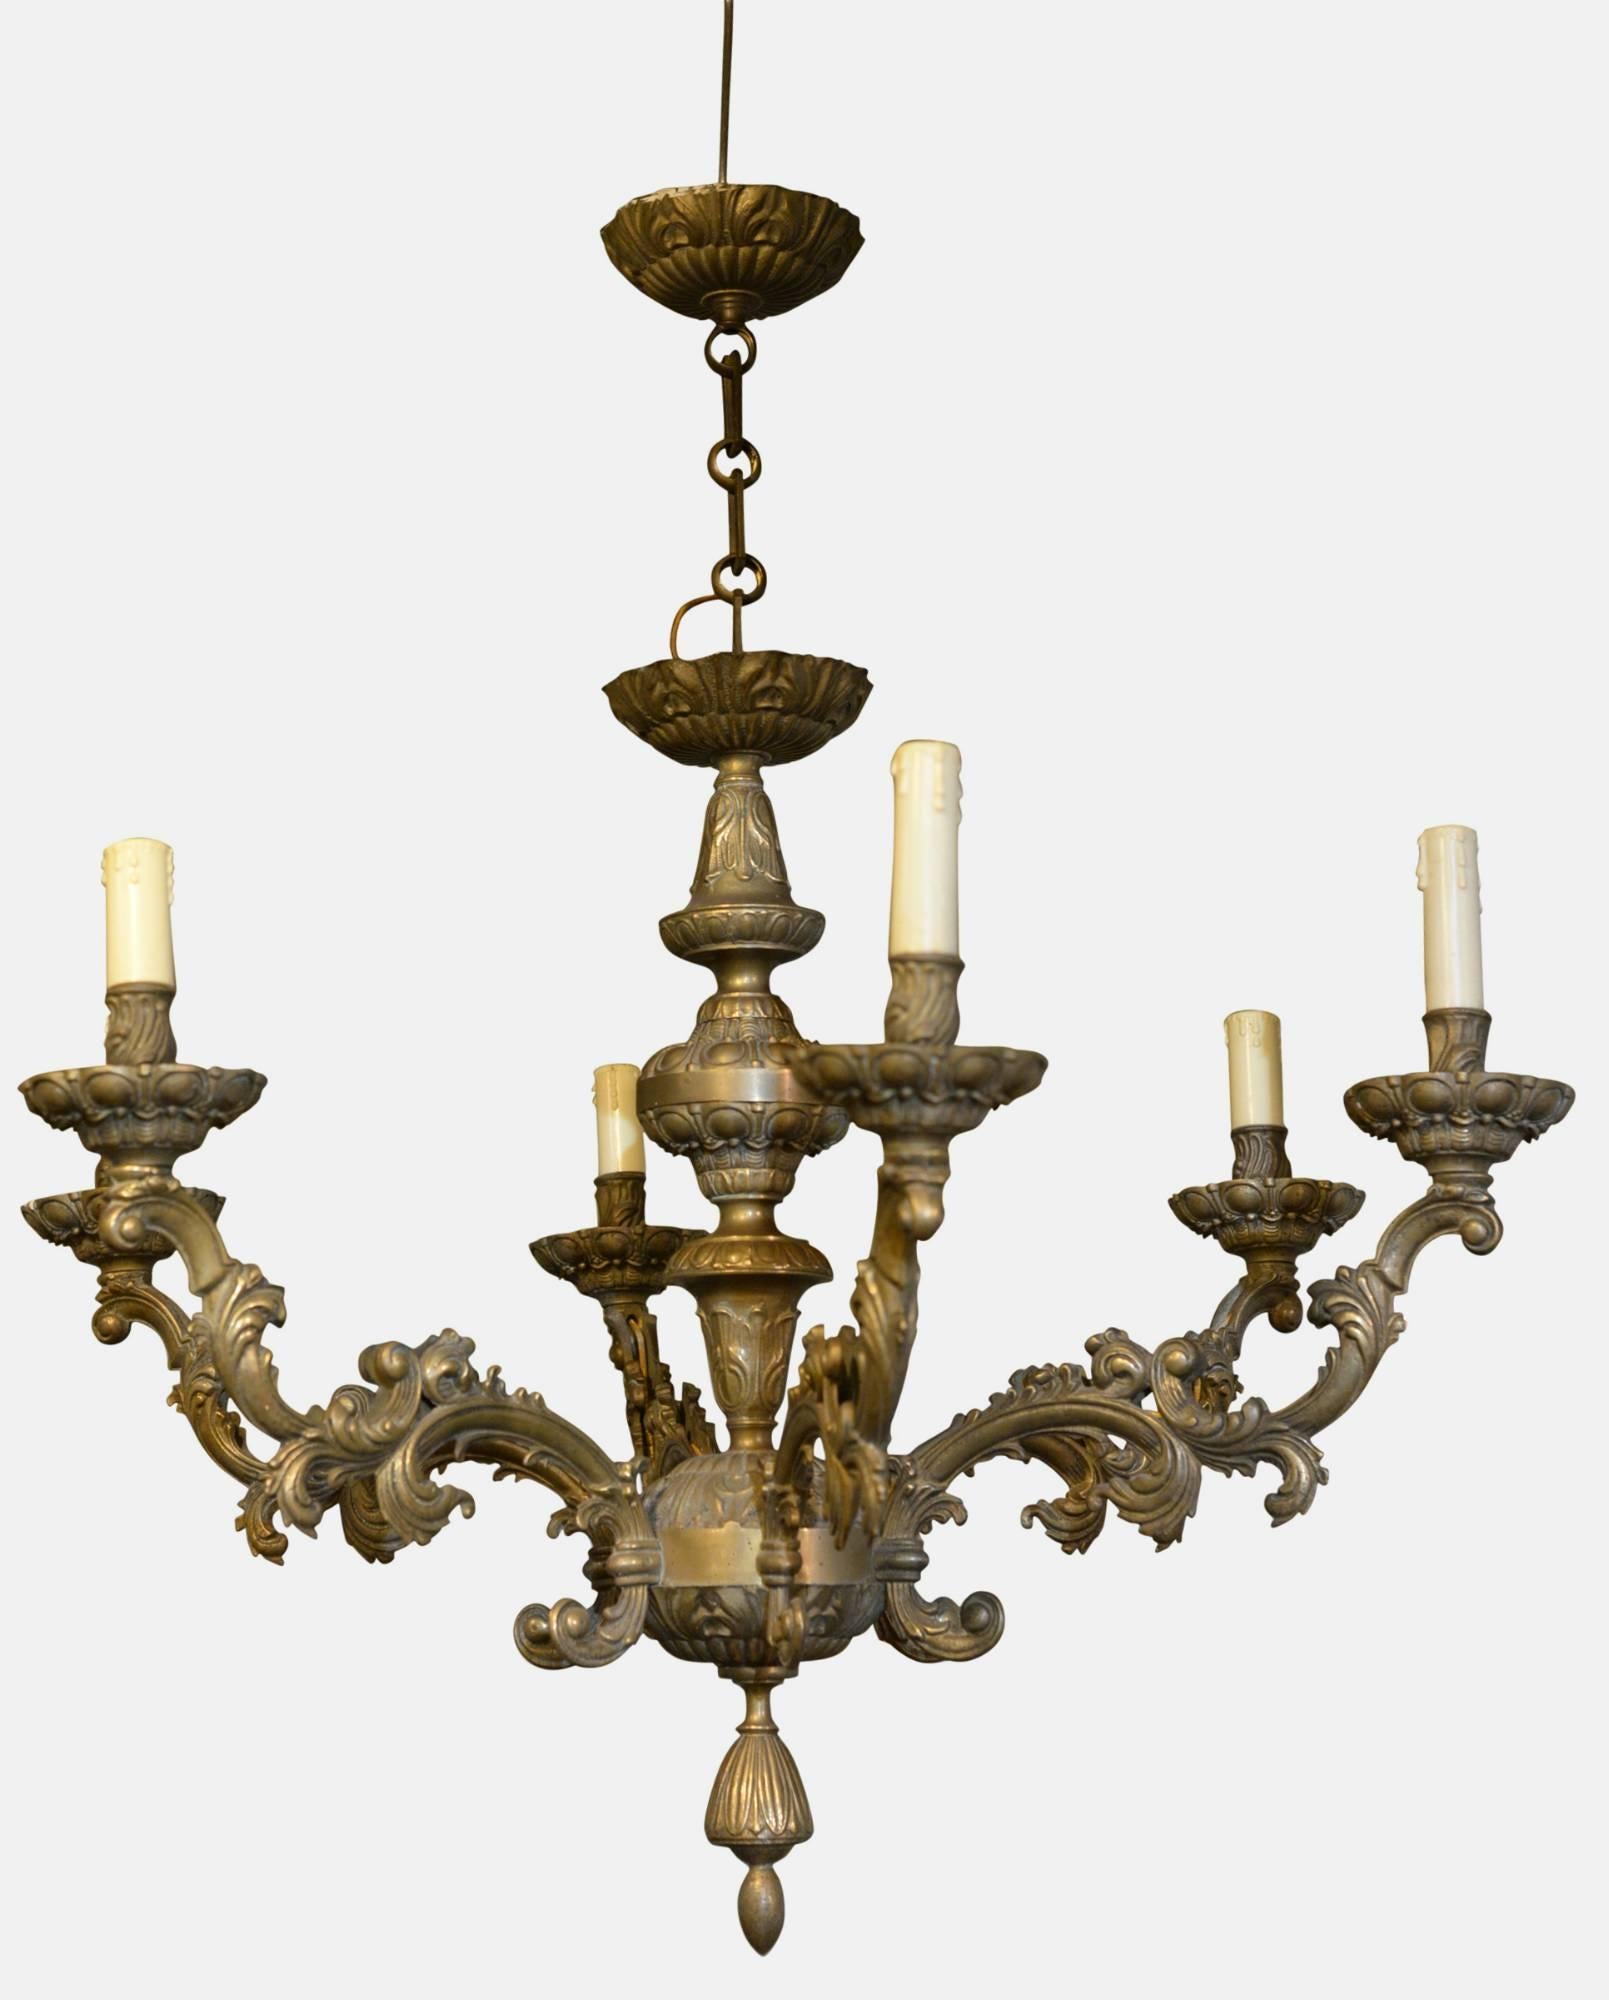 A heavy quality French cast brass six branch chandelier,

circa 1930.